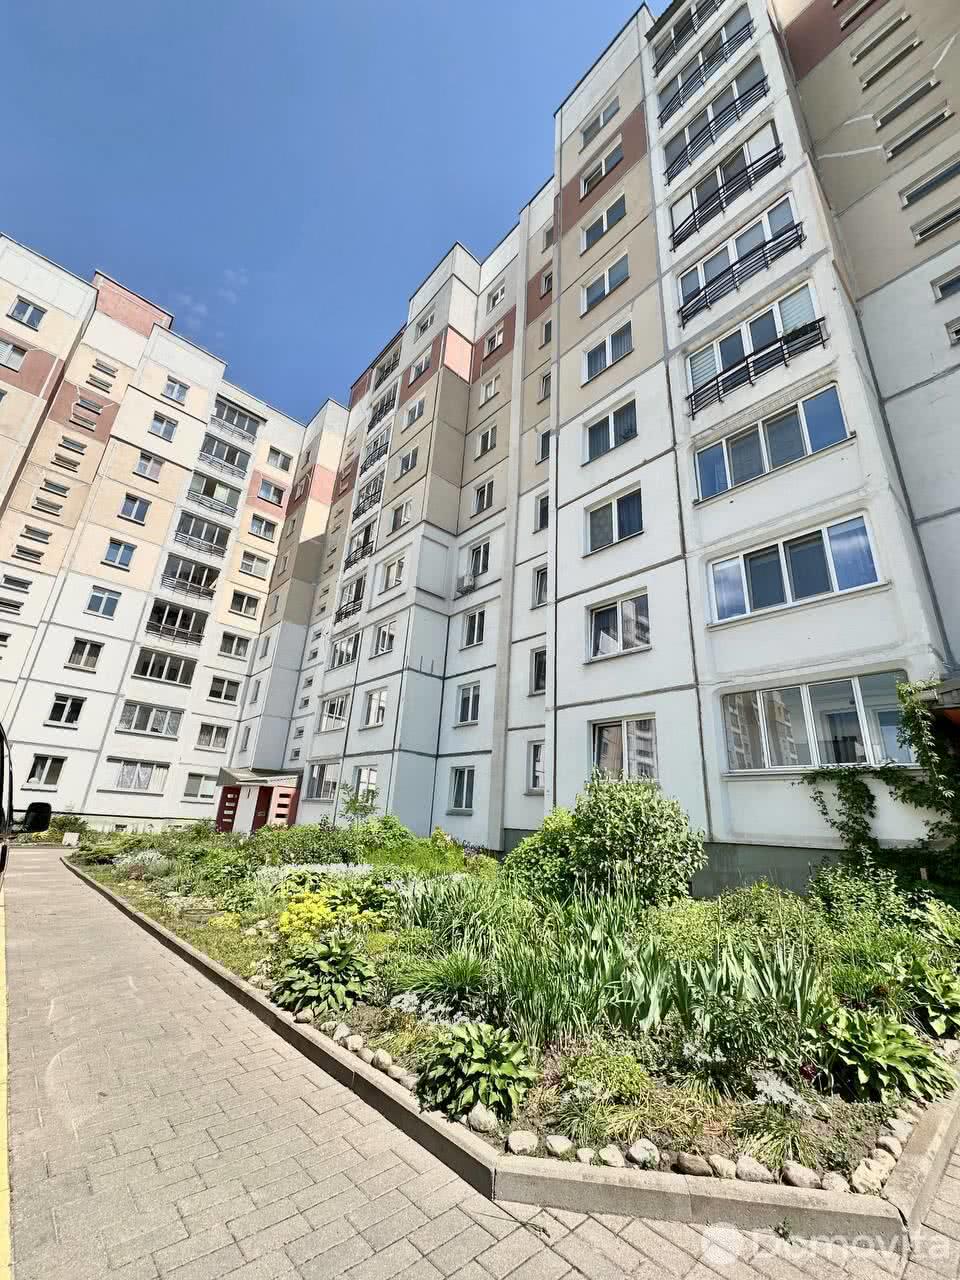 квартира, Минск, ул. Чичурина, д. 6, стоимость аренды 802 р./мес.